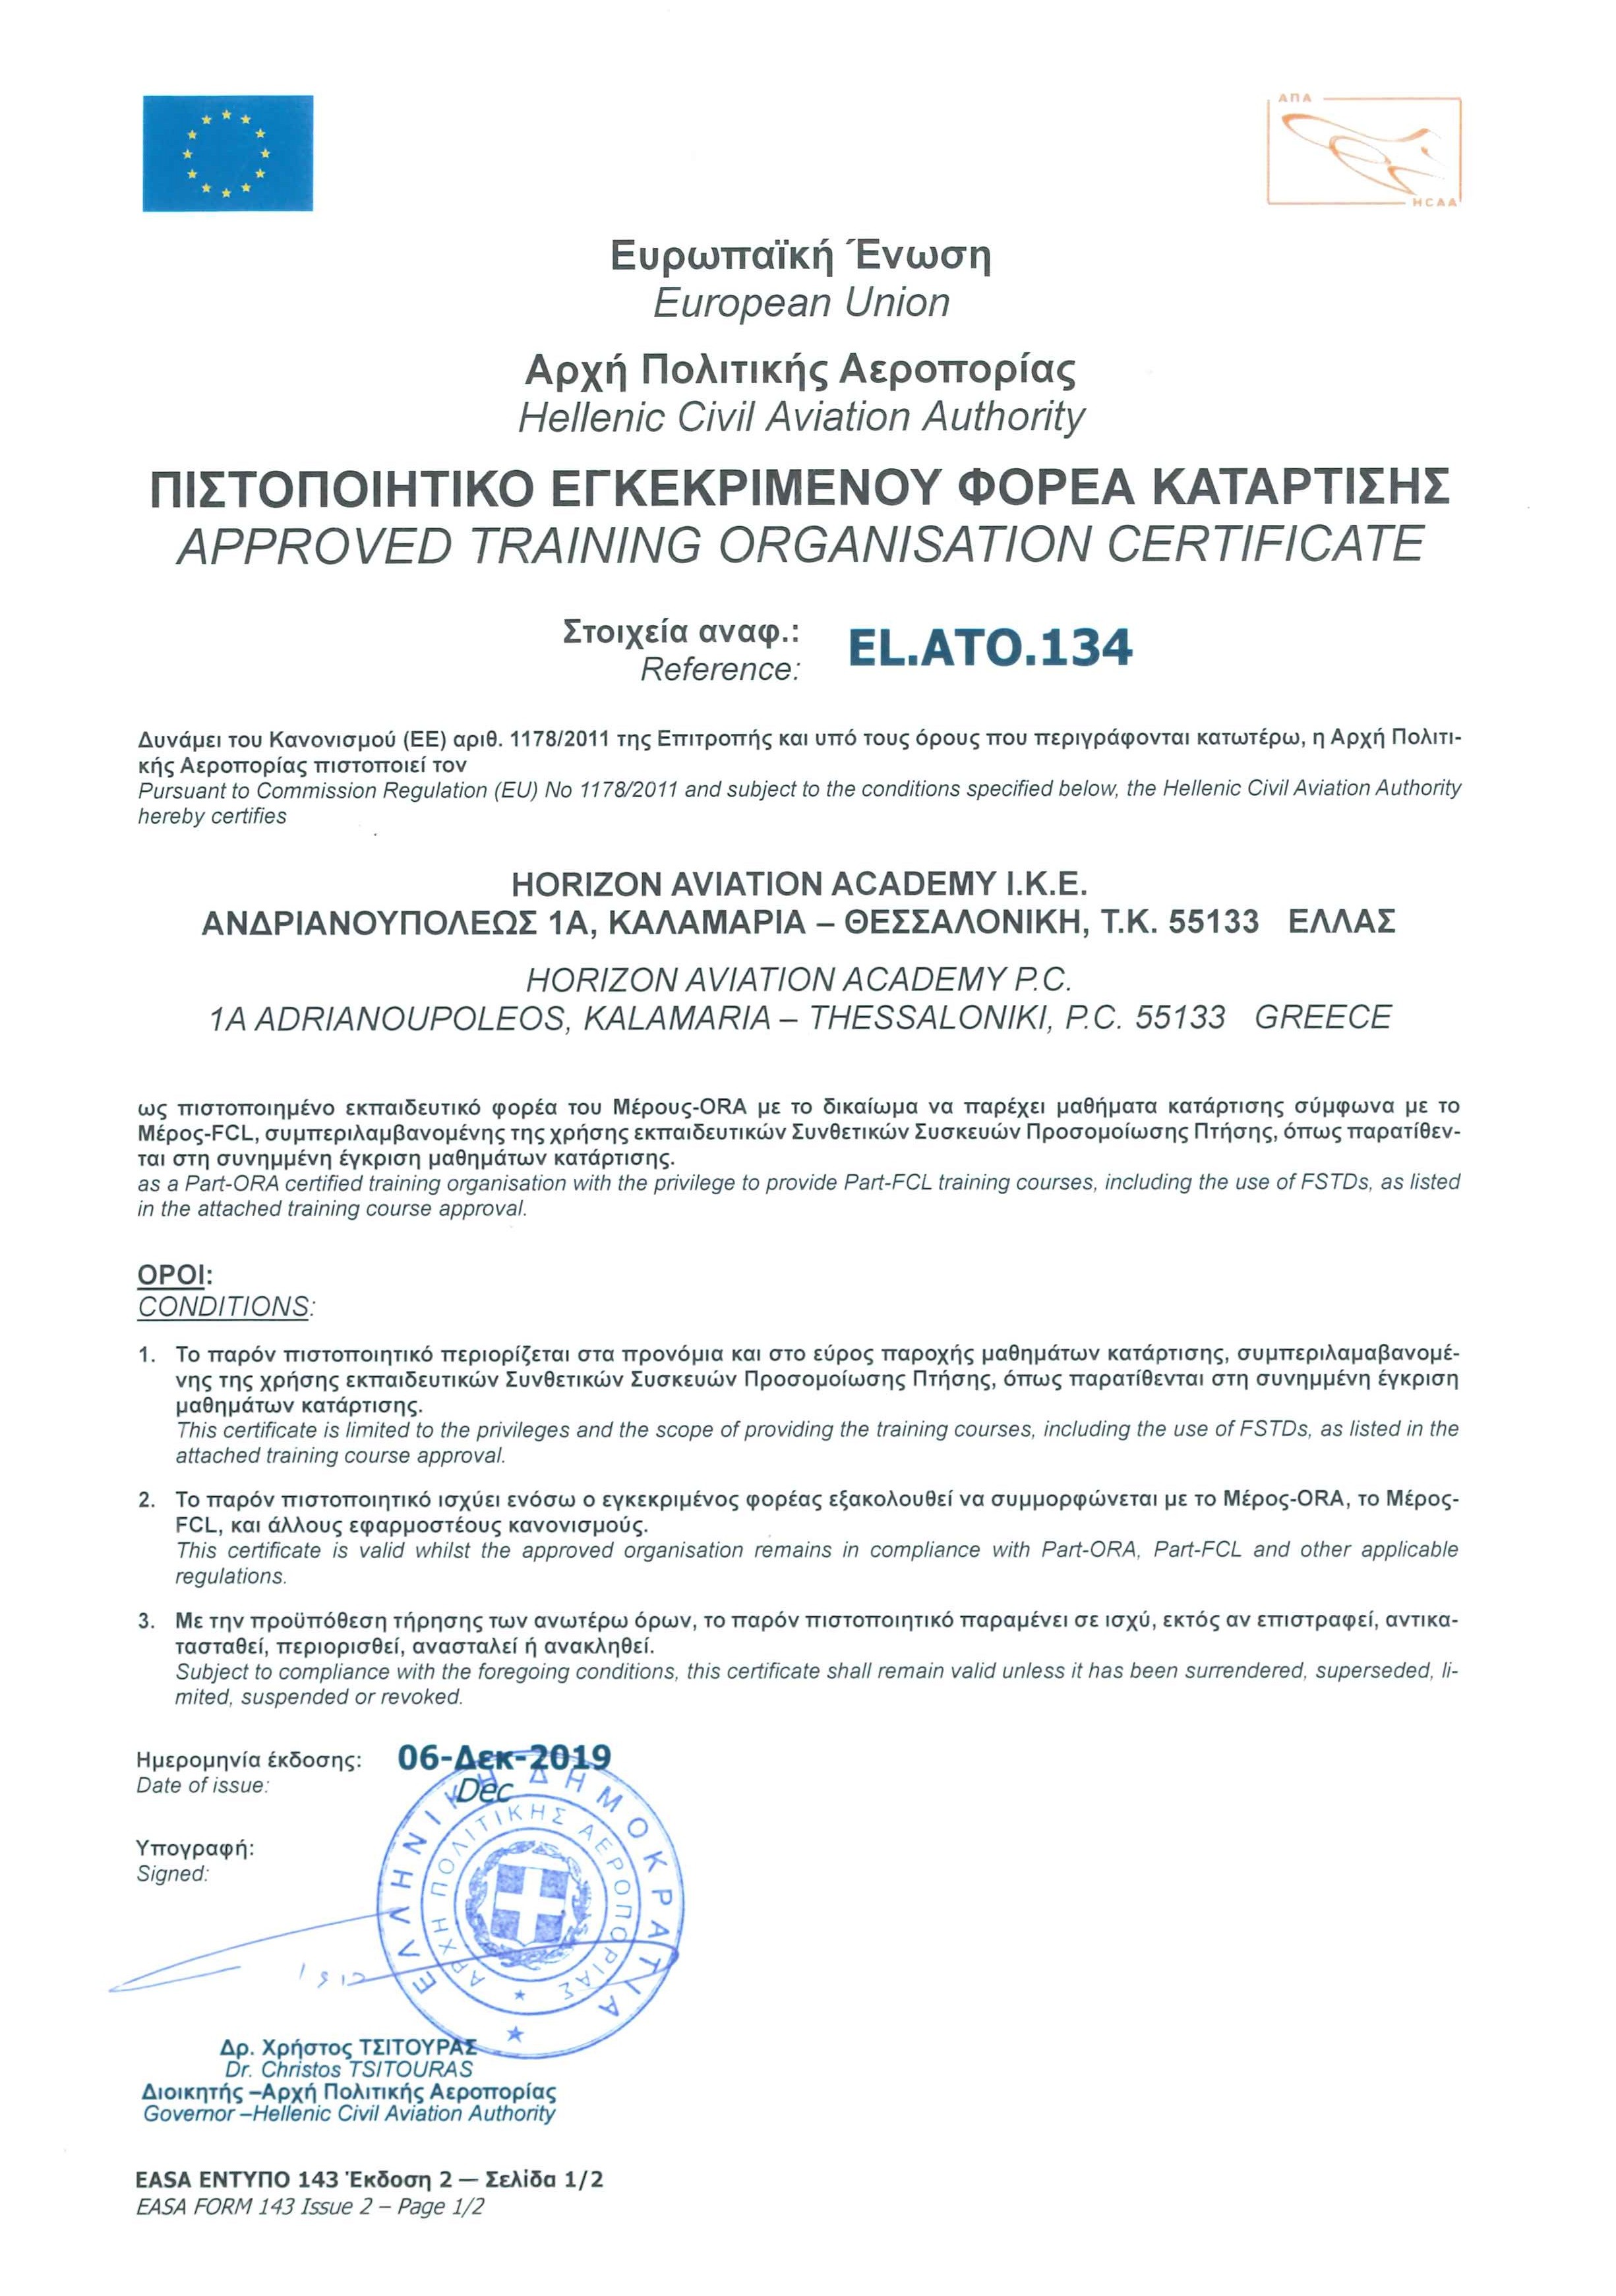 approved-training-organisation-certificate-elato134-QTDUy.jpg